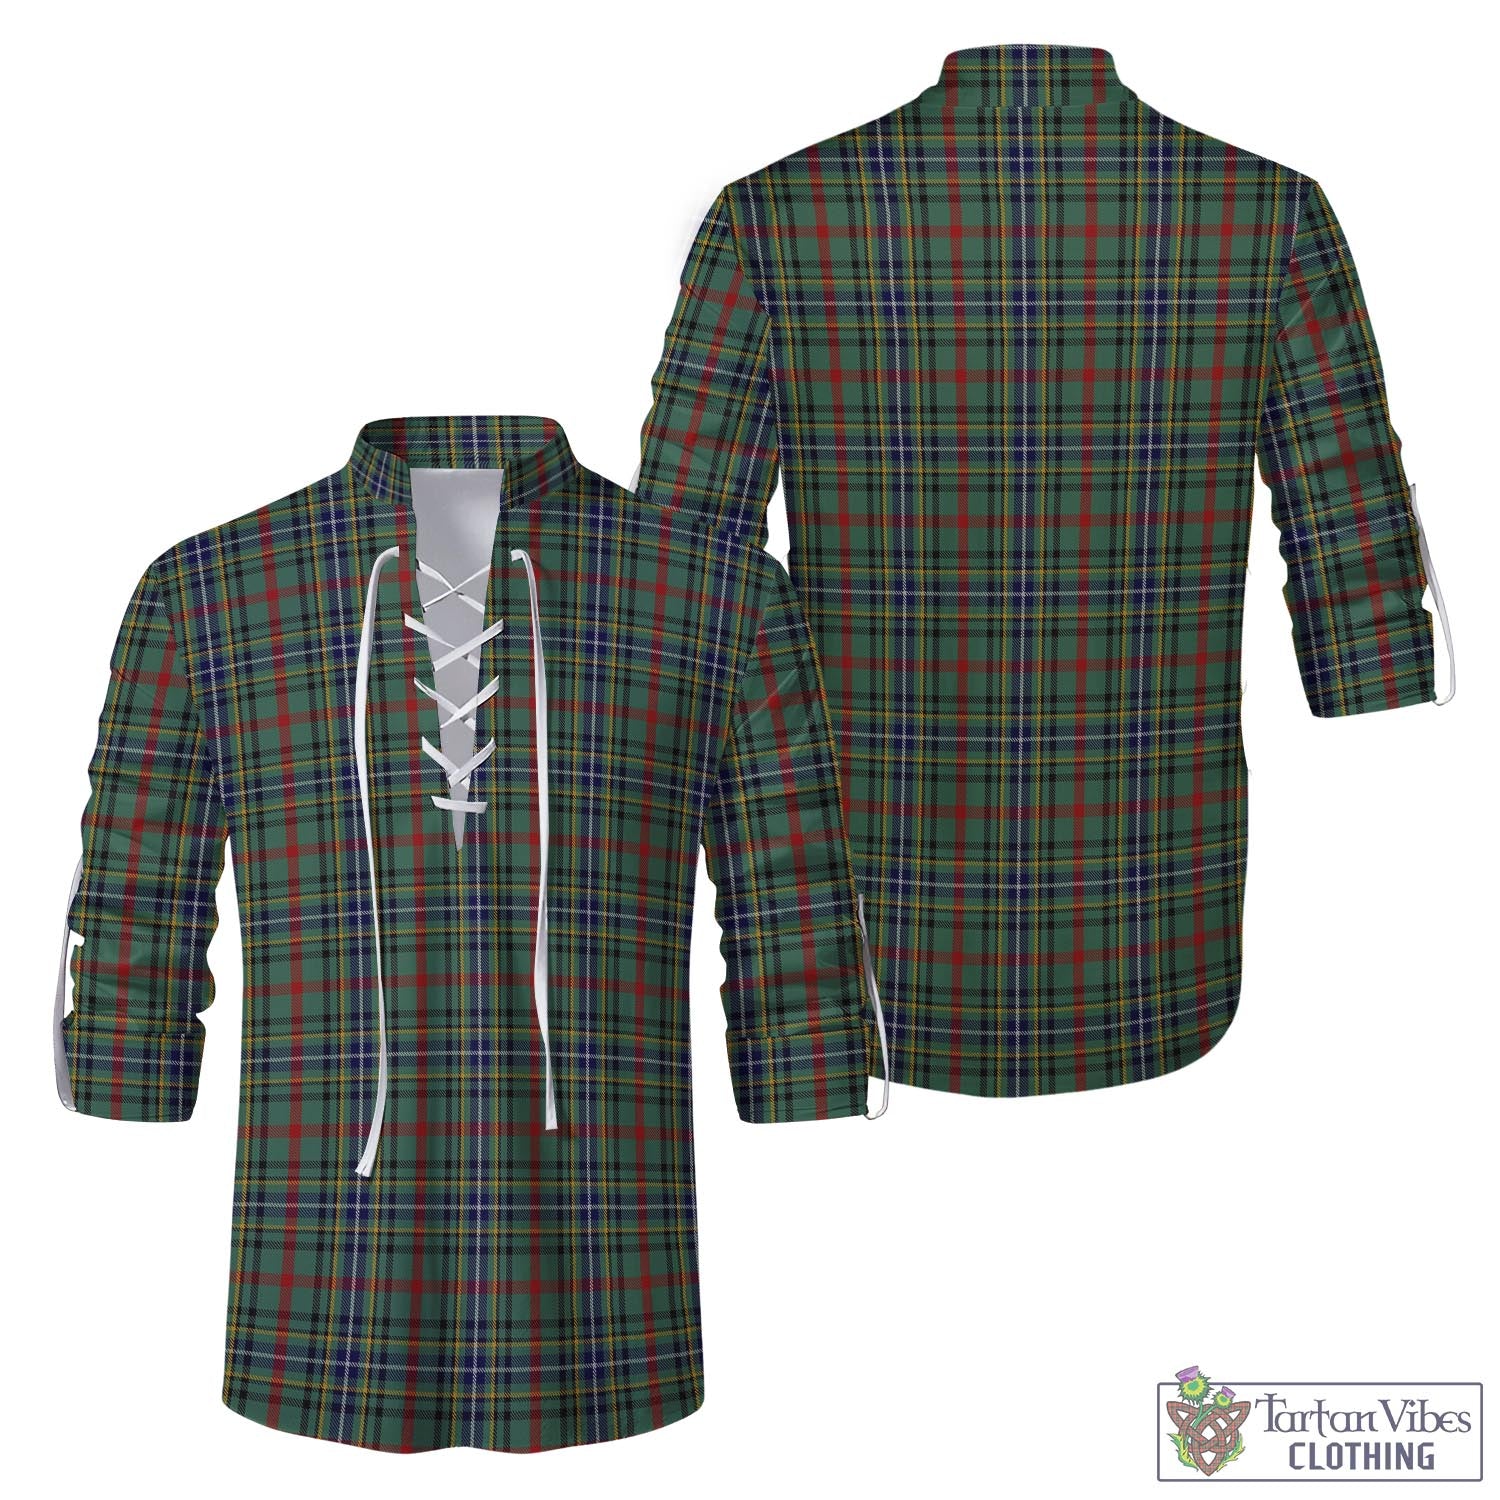 Tartan Vibes Clothing Bisset Tartan Men's Scottish Traditional Jacobite Ghillie Kilt Shirt